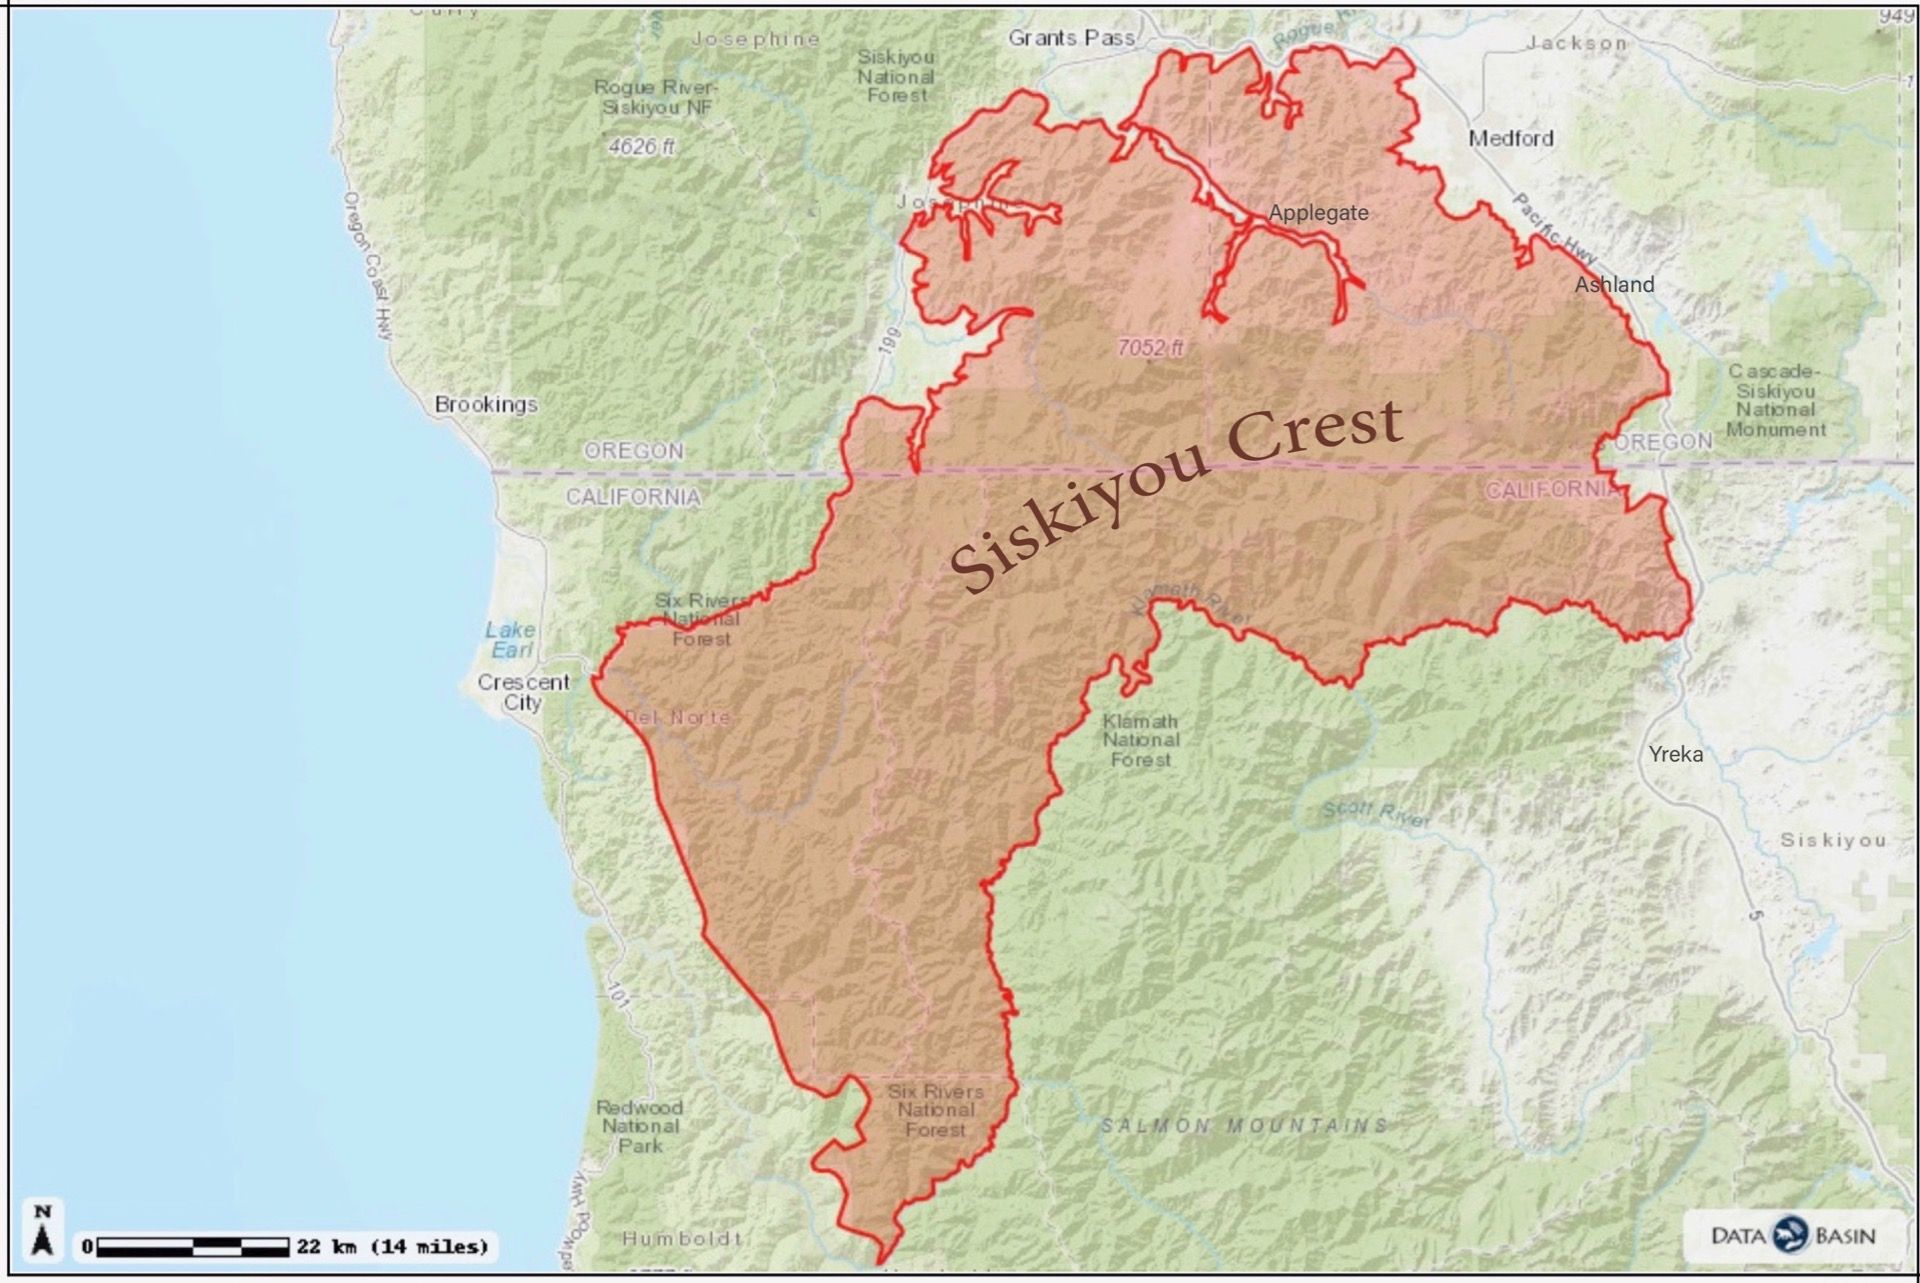 The Siskiyou Crest A subrange of the Klamath Mountains